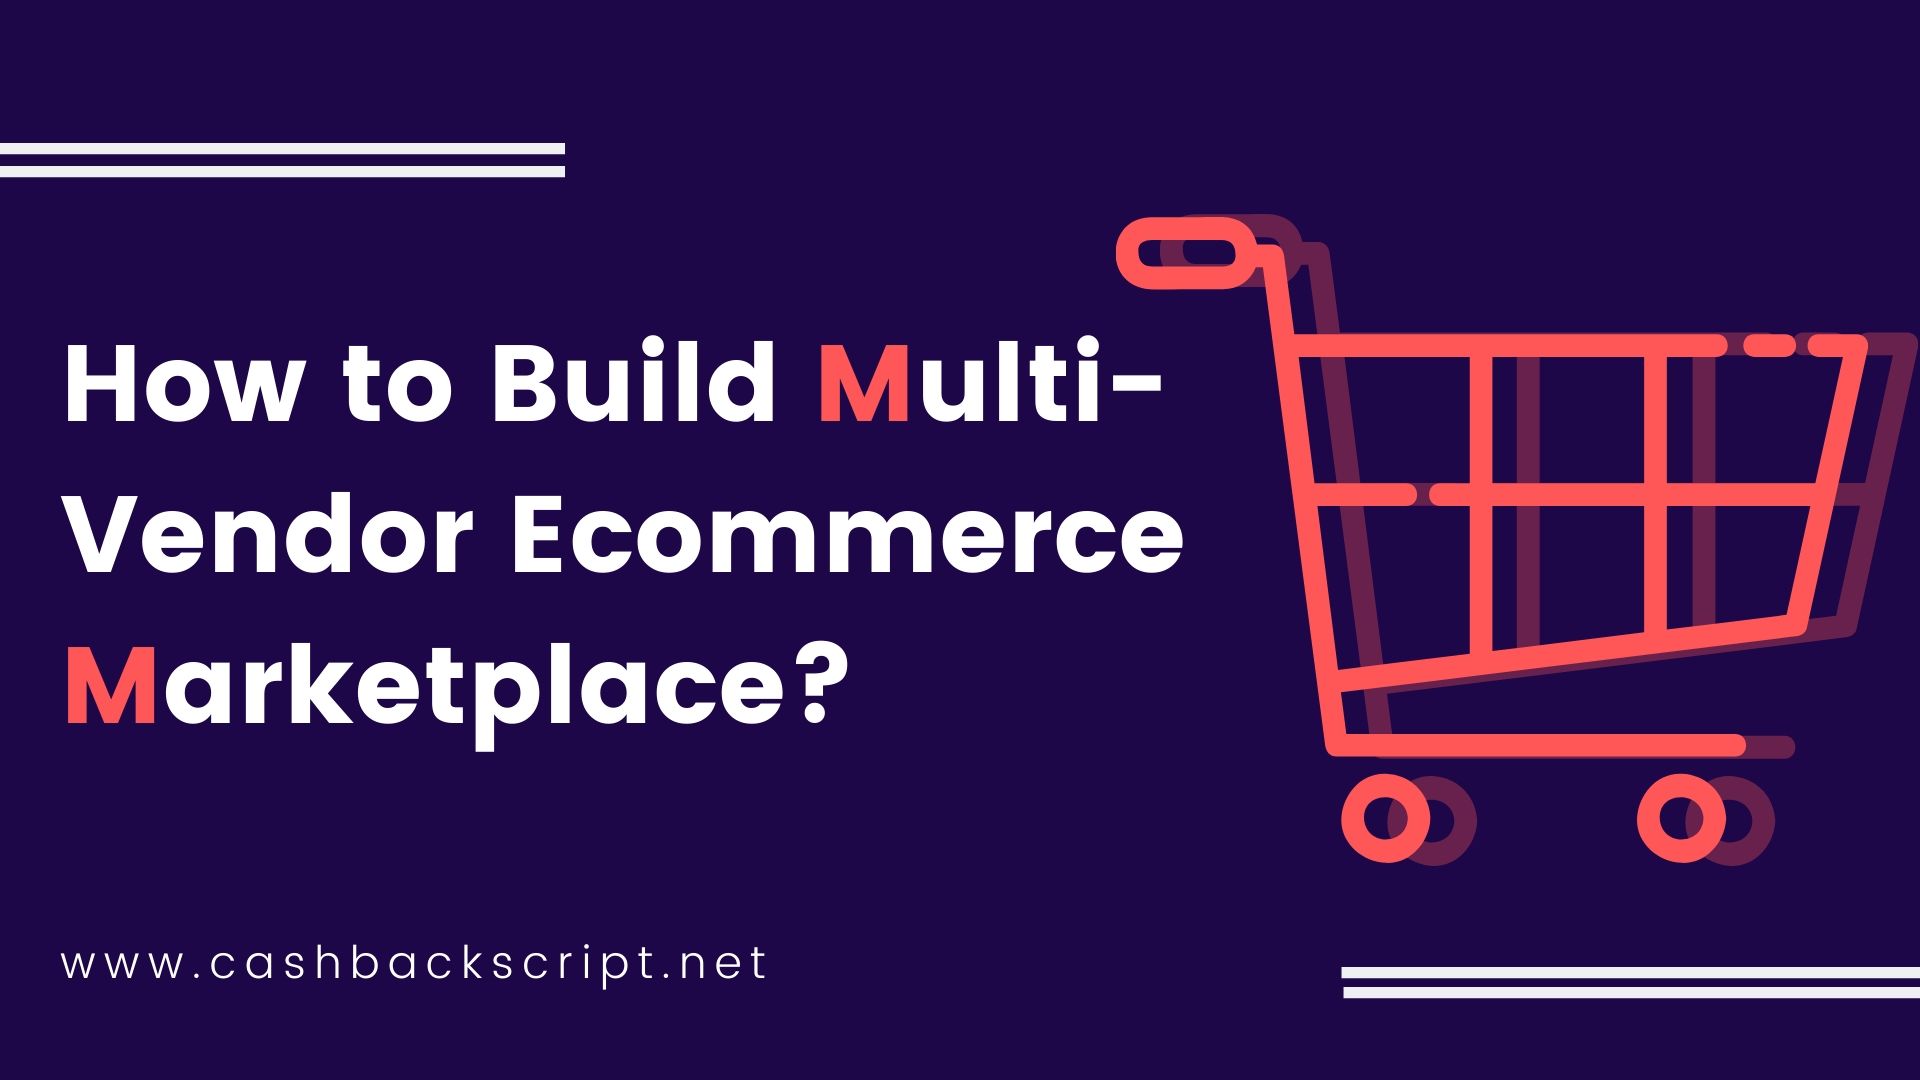 How to Build Multi-Vendor Ecommerce Marketplace?